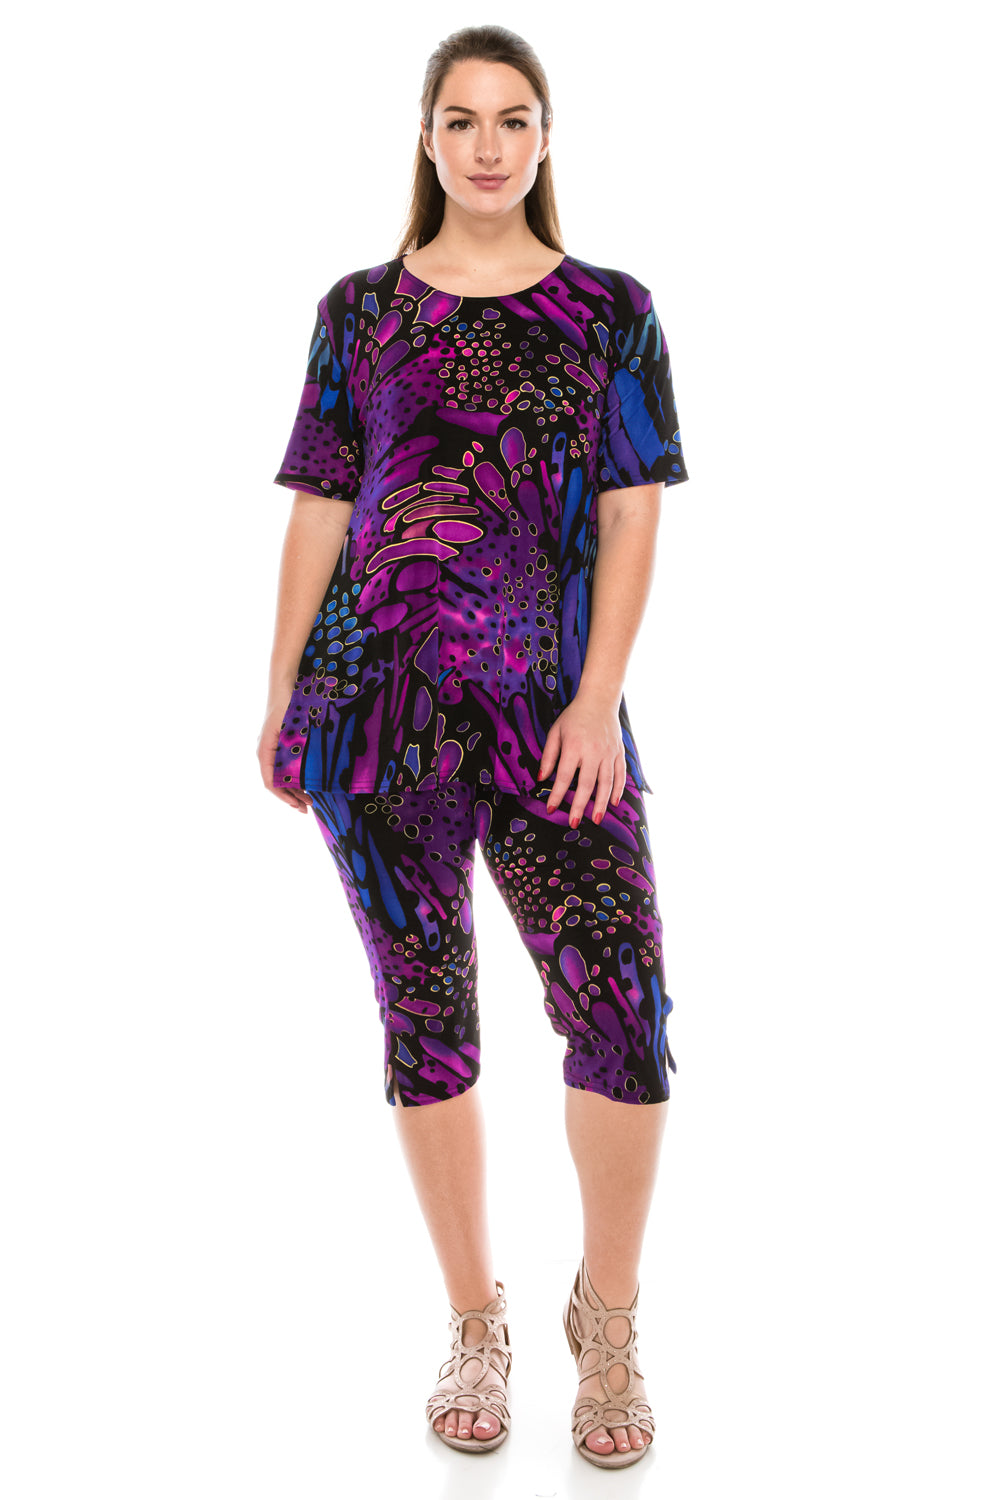 Jostar Women's Stretchy Capri Pant Set Short Sleeve Print, 903BN-SP-W207 - Jostar Online